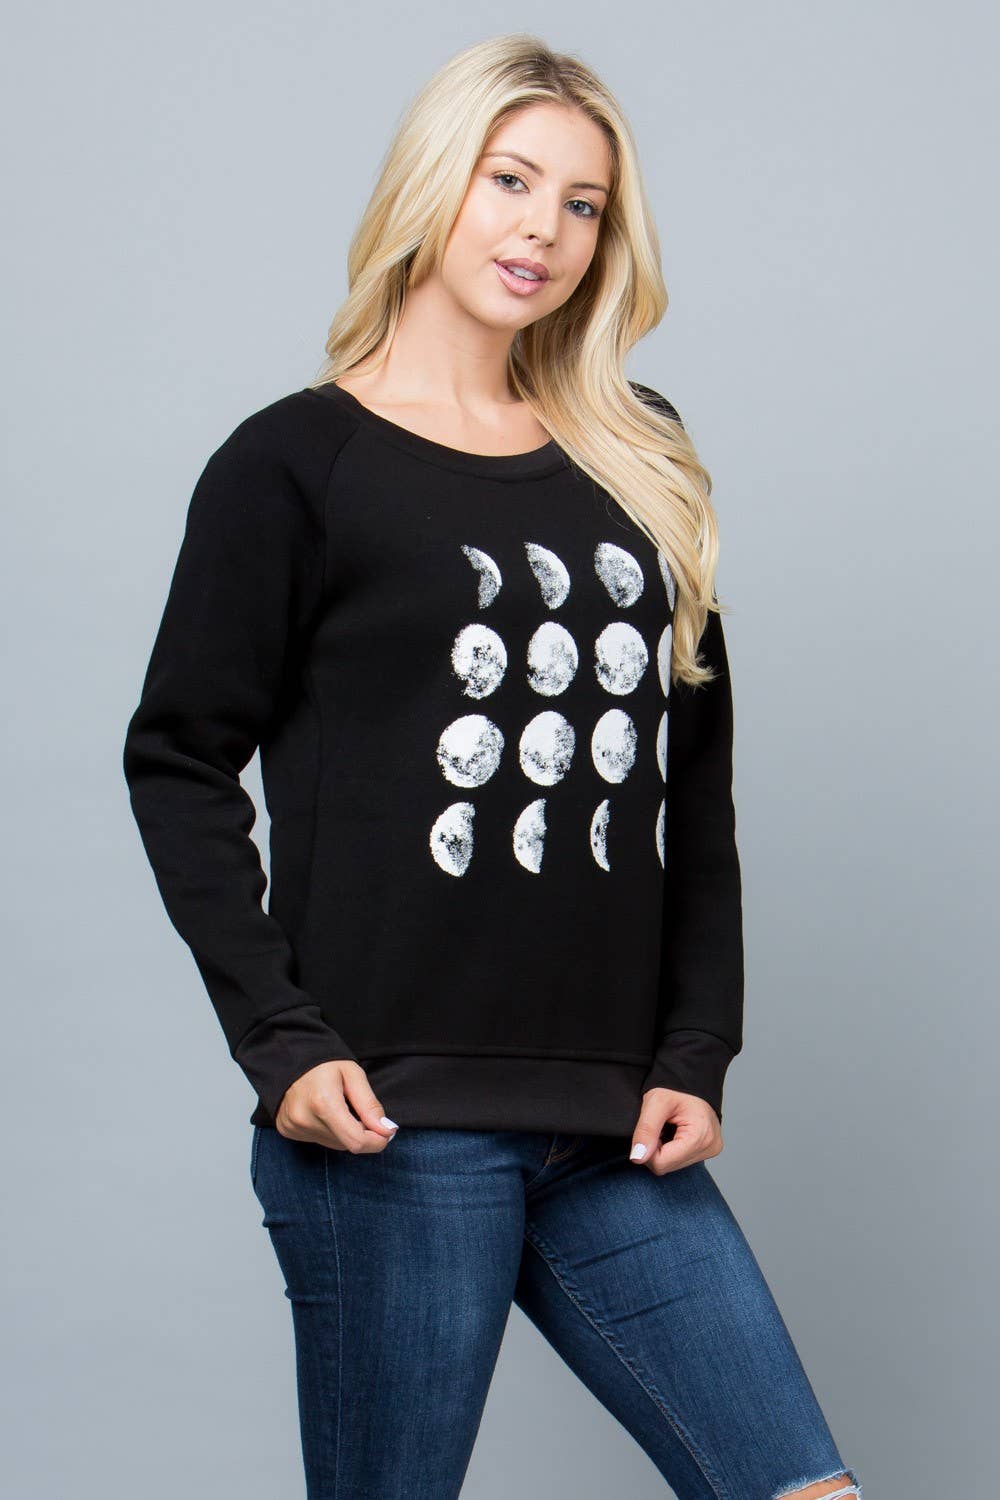 Phase Of Moon Print Sweatshirt by LA Soul